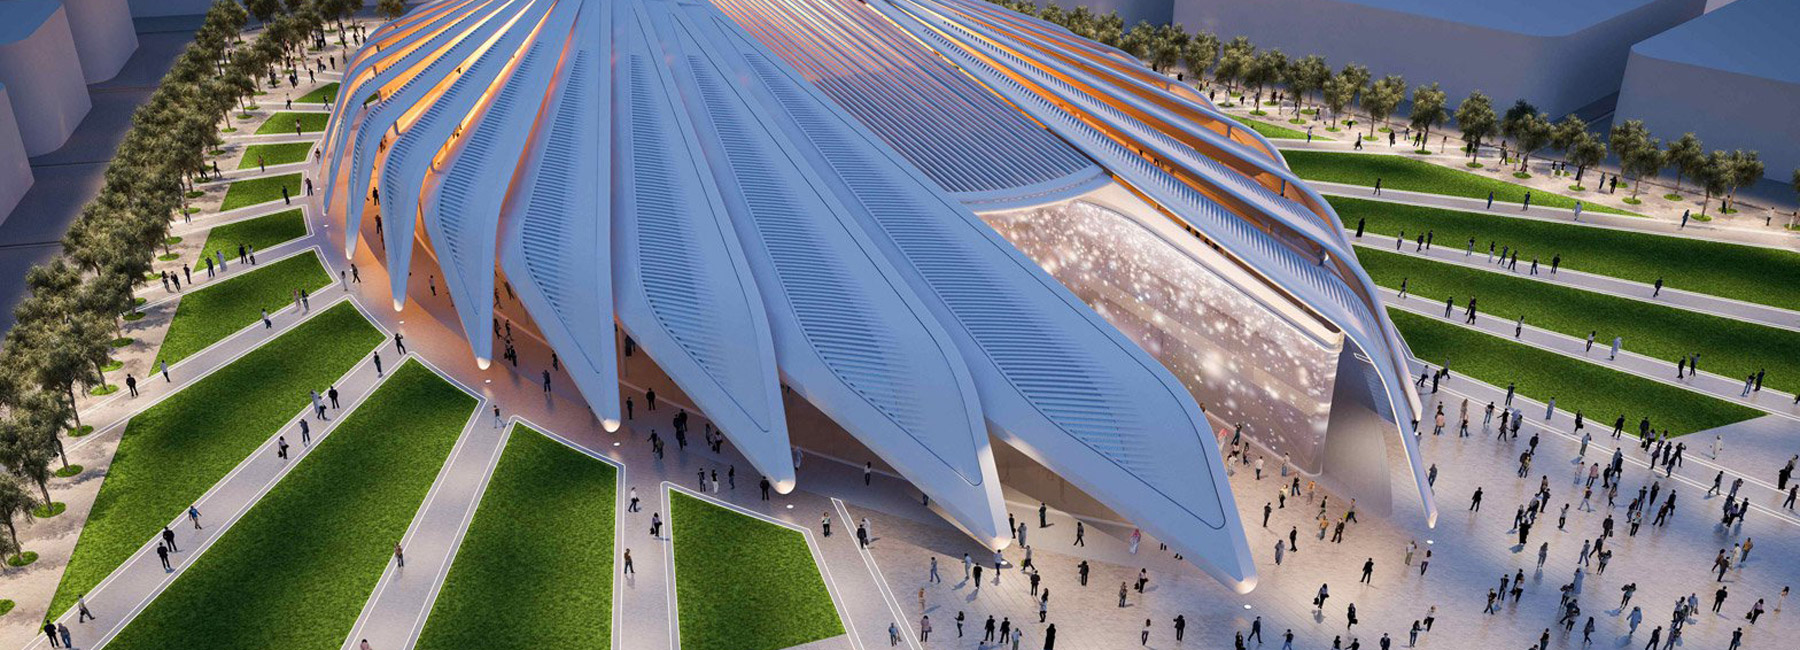 santiago calatrava's UAE pavilion for dubai expo 2020 breaks ground